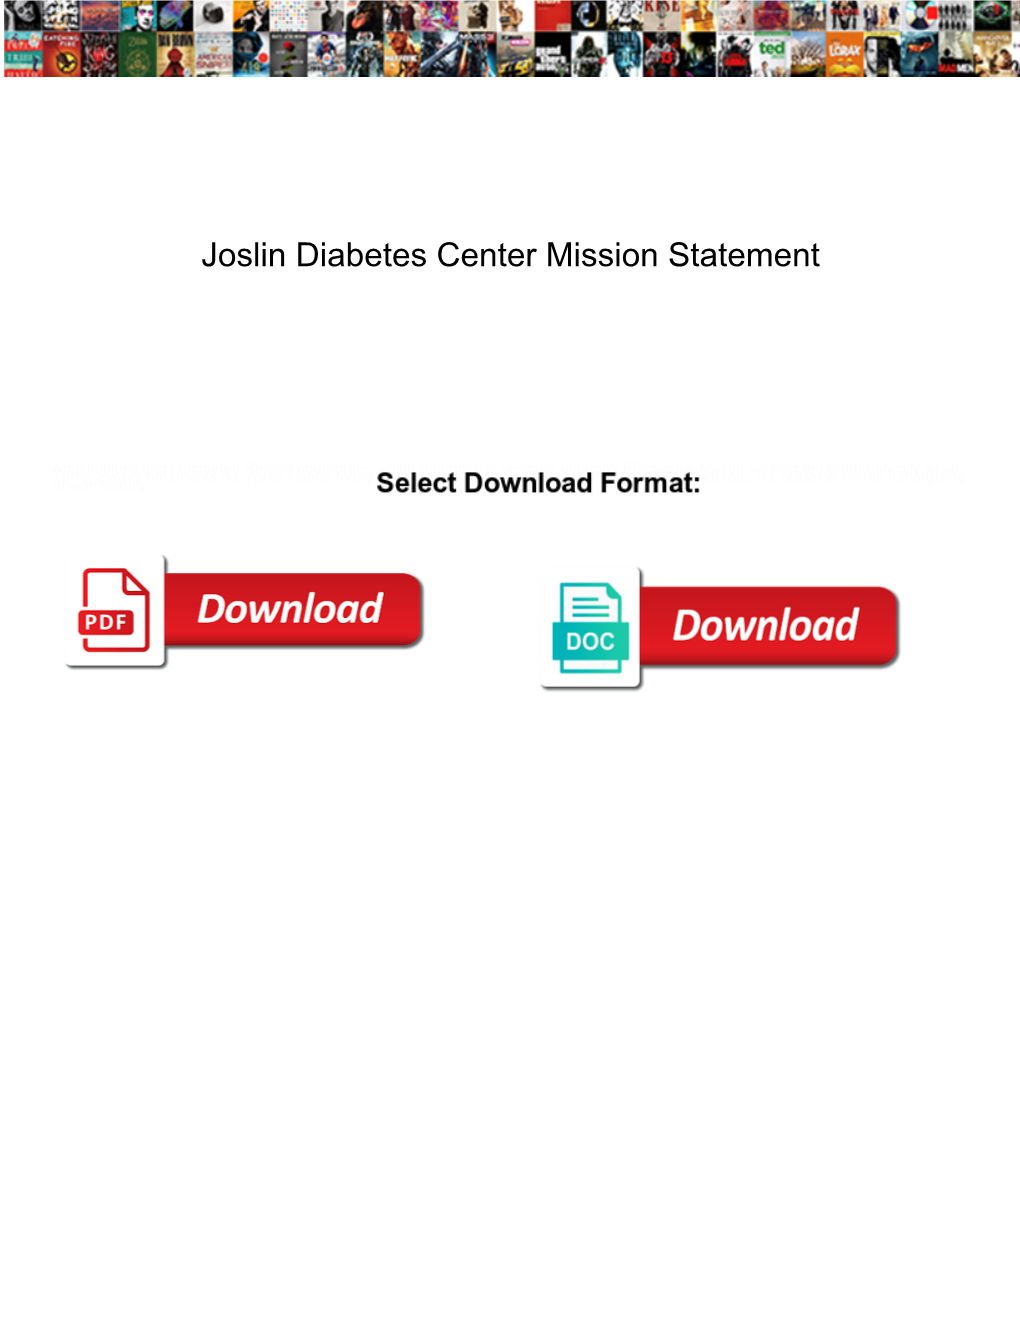 Joslin Diabetes Center Mission Statement